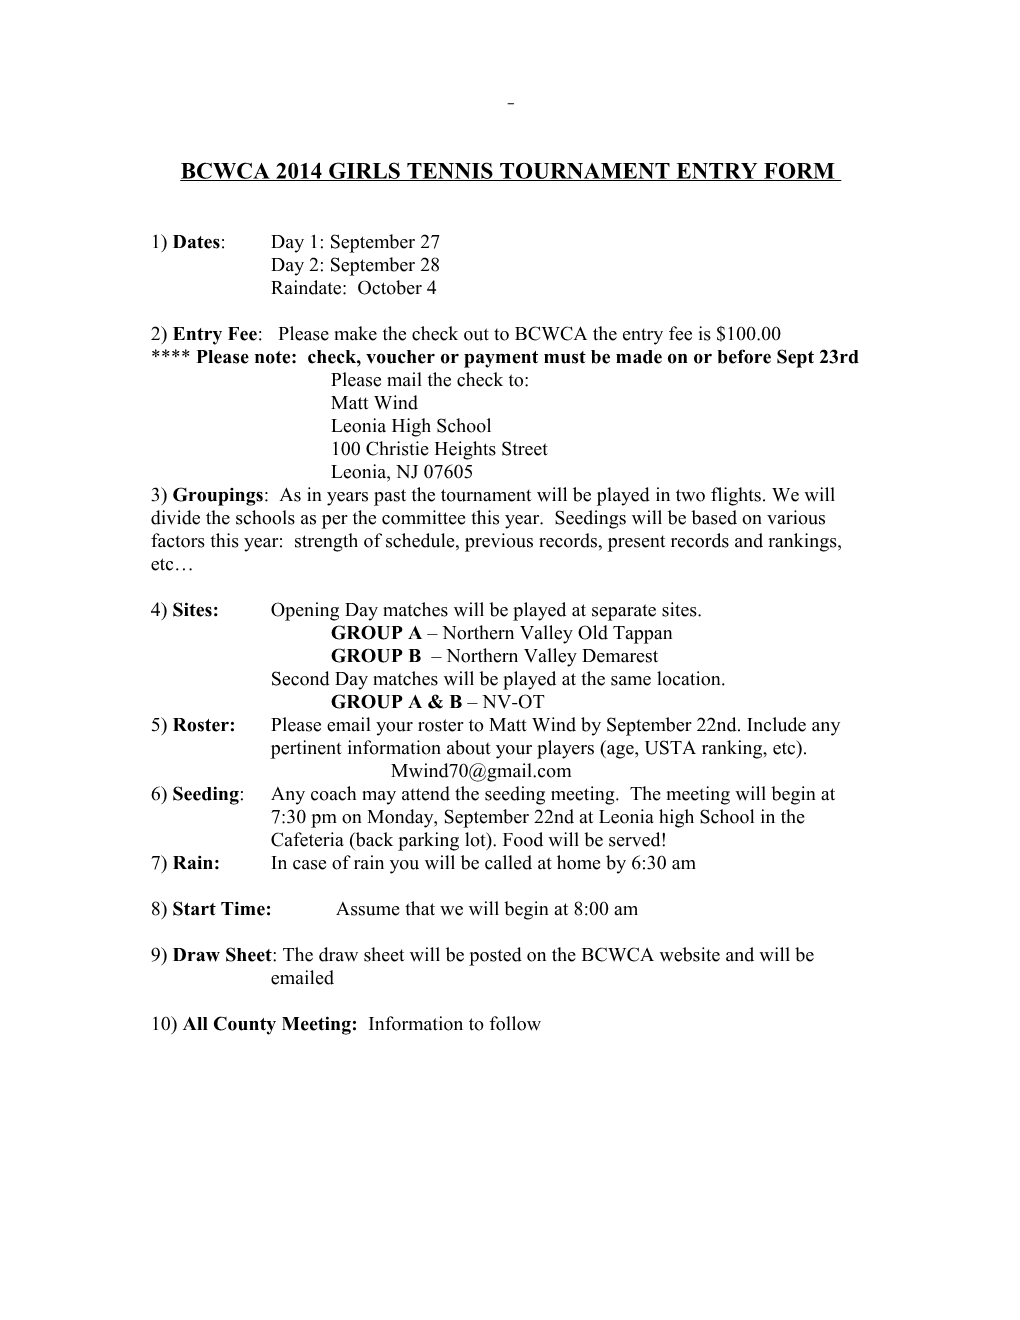 BCWCA 2005 Girls Tennis Tournament